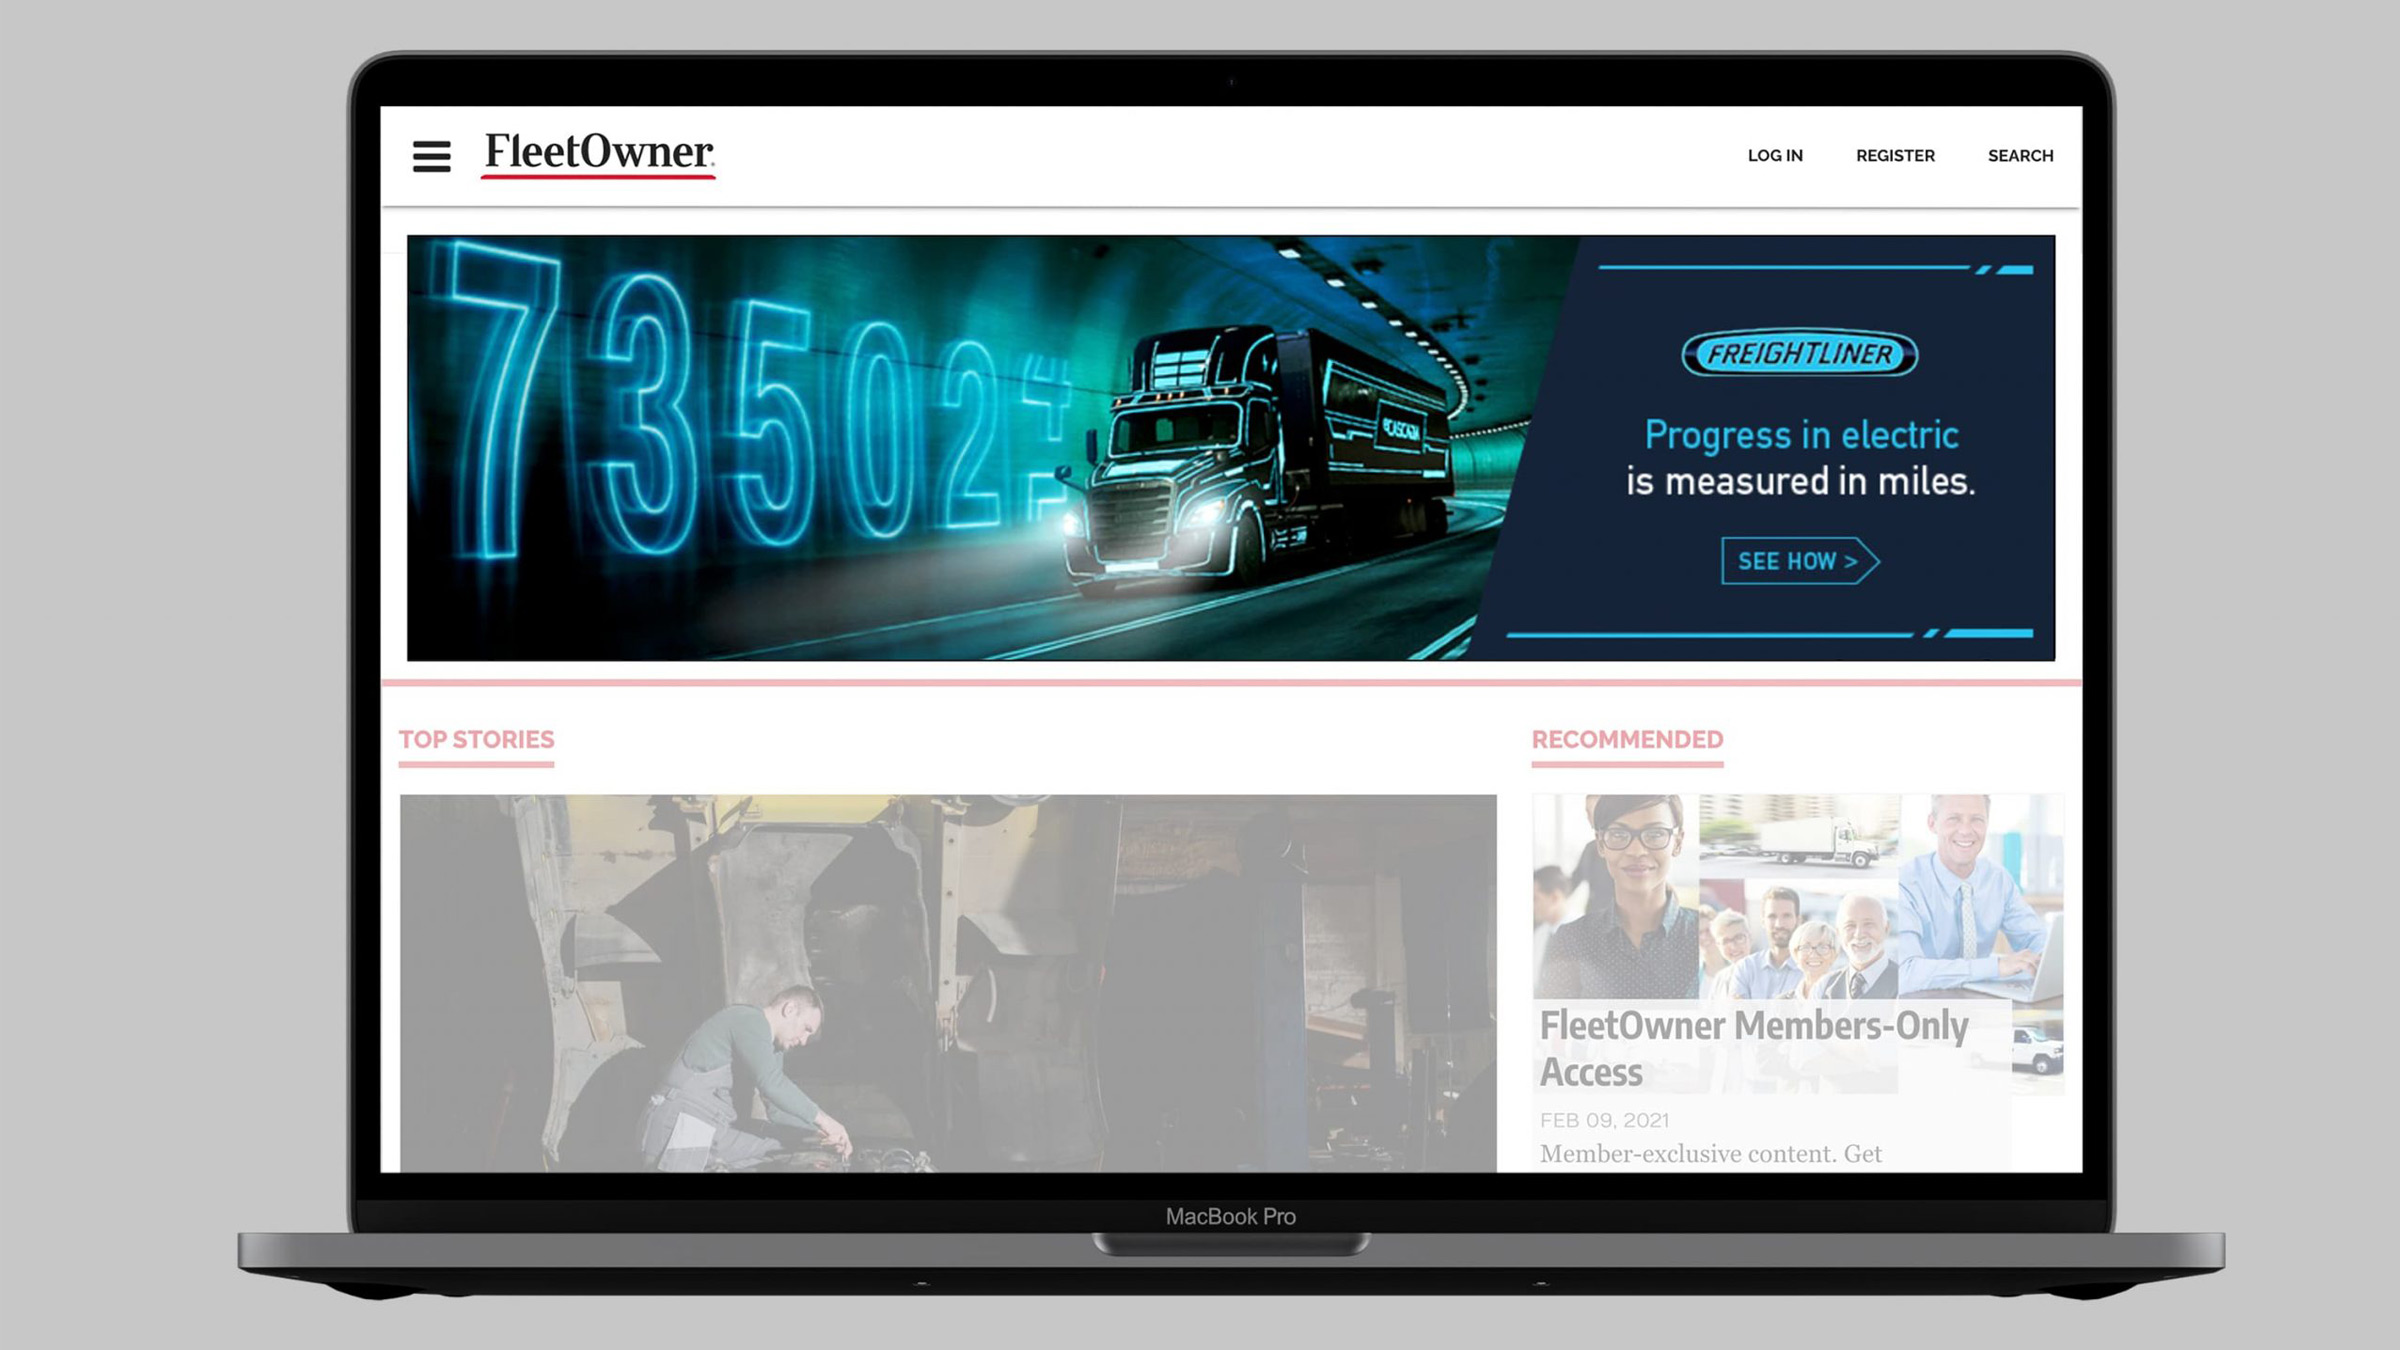 Freightliner digital advertisement on FleetOwner website